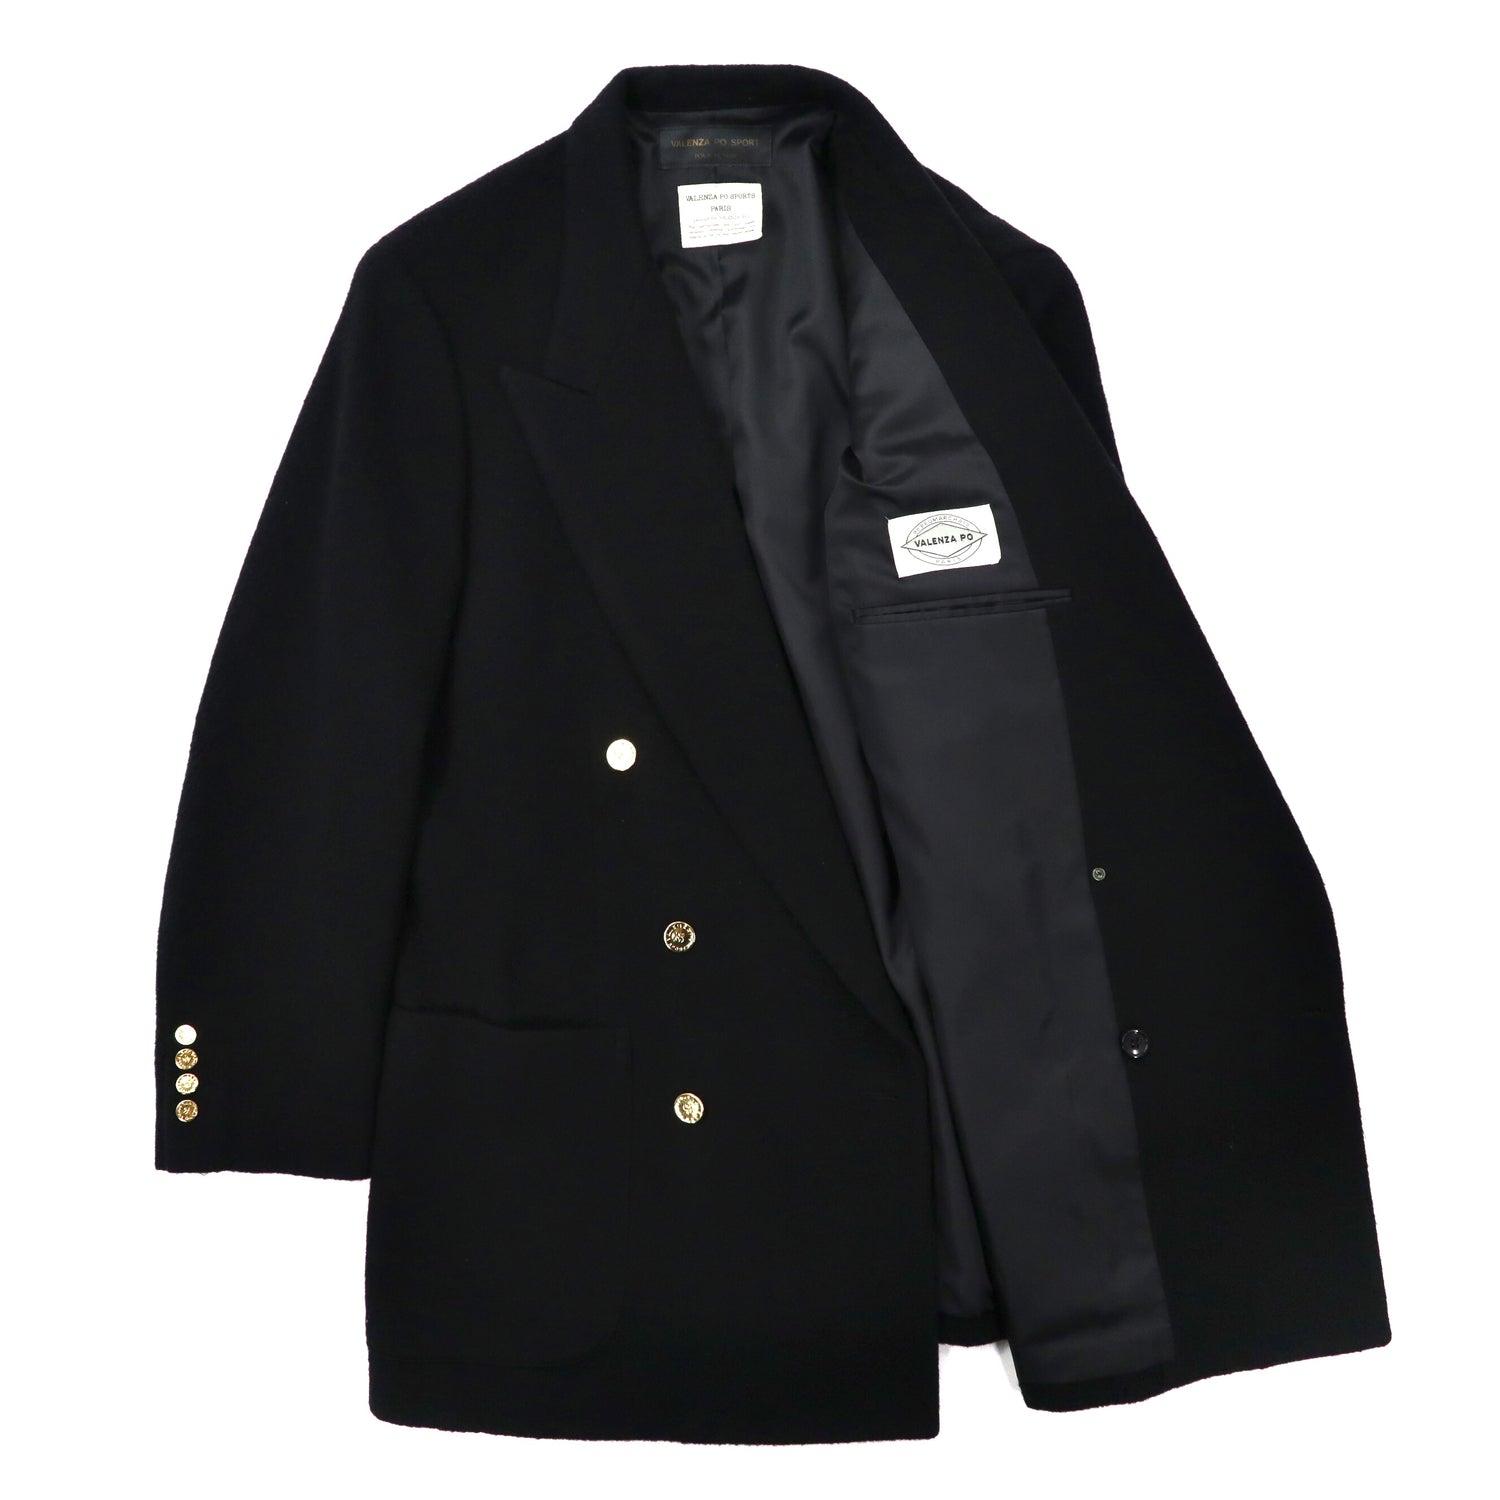 VALENZA PO SPORT Double Blest Tailored Jacket M Black Wool 